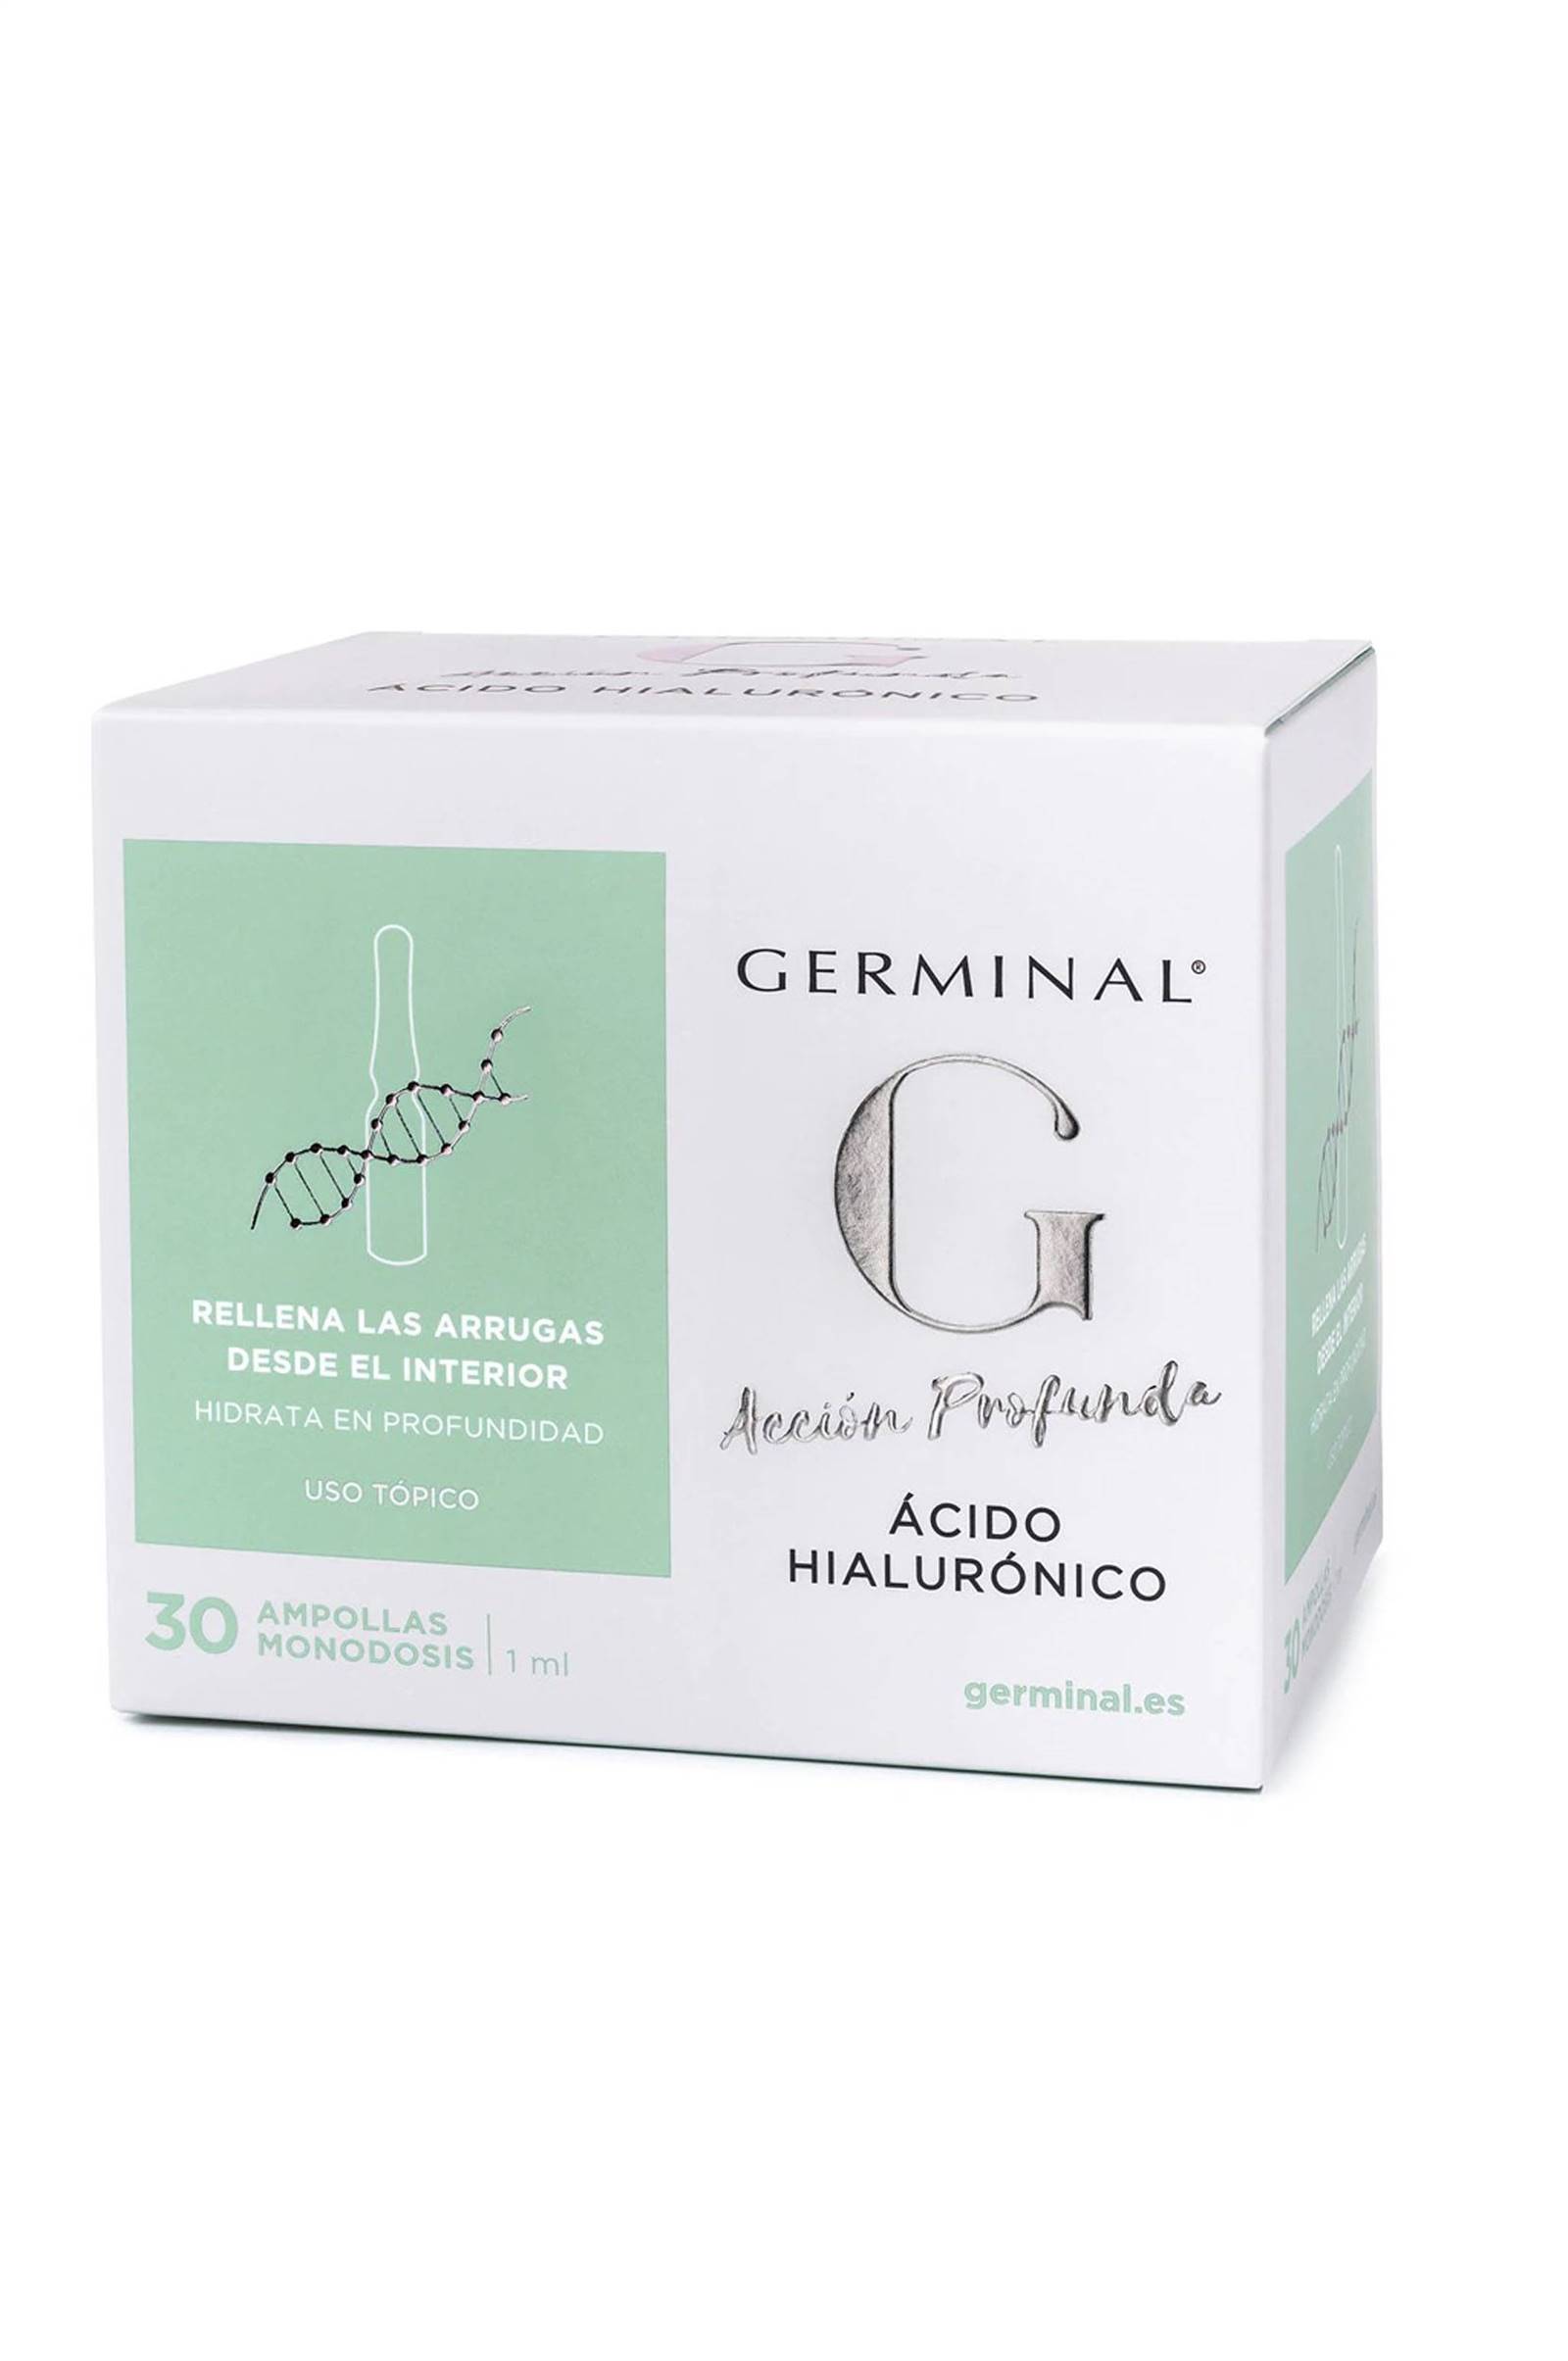 sérum ácido hialurónico germinal